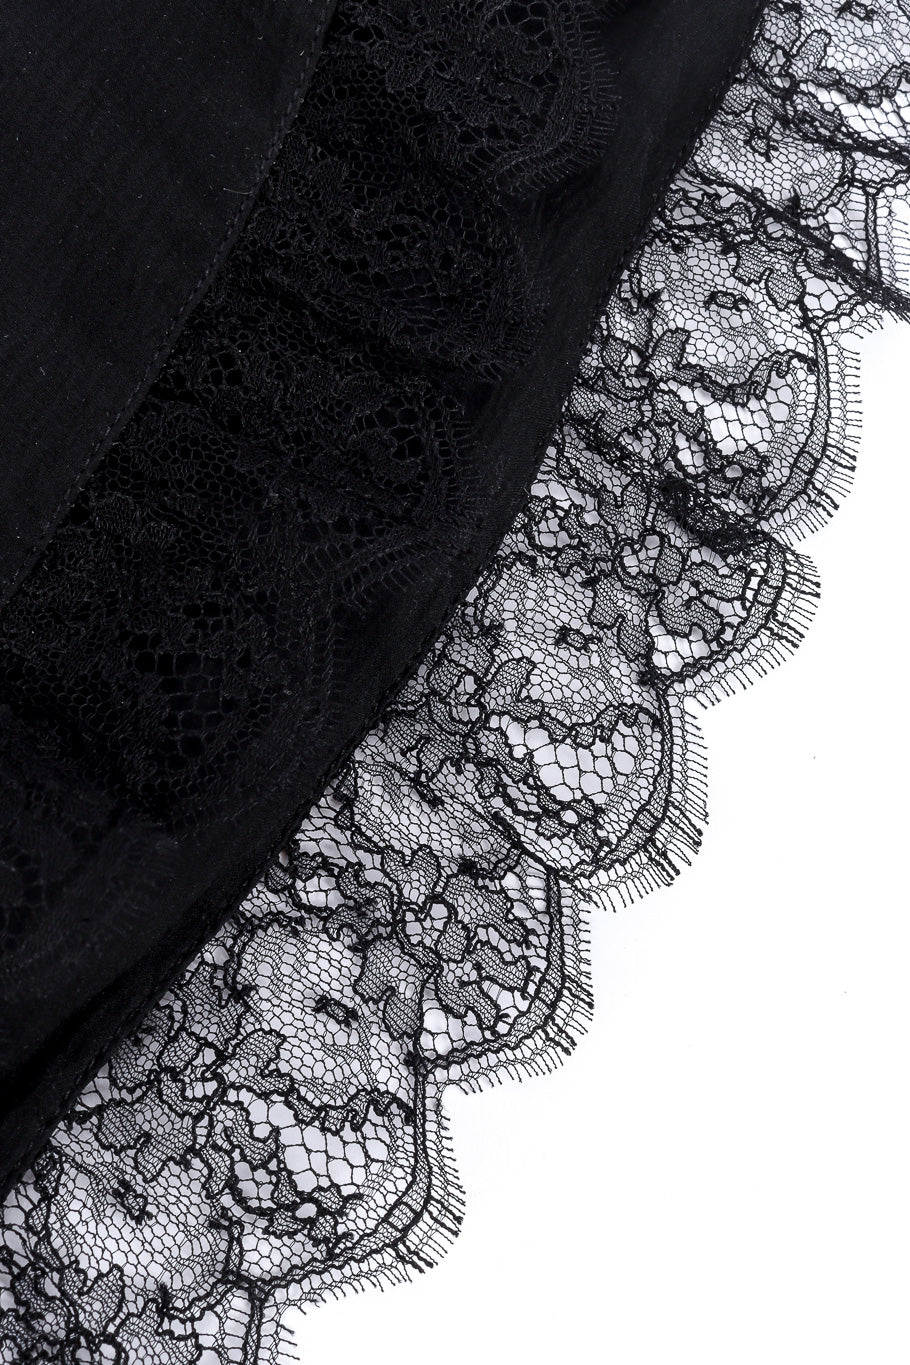 Mini dress by Chanel flat lay lace trim @recessla